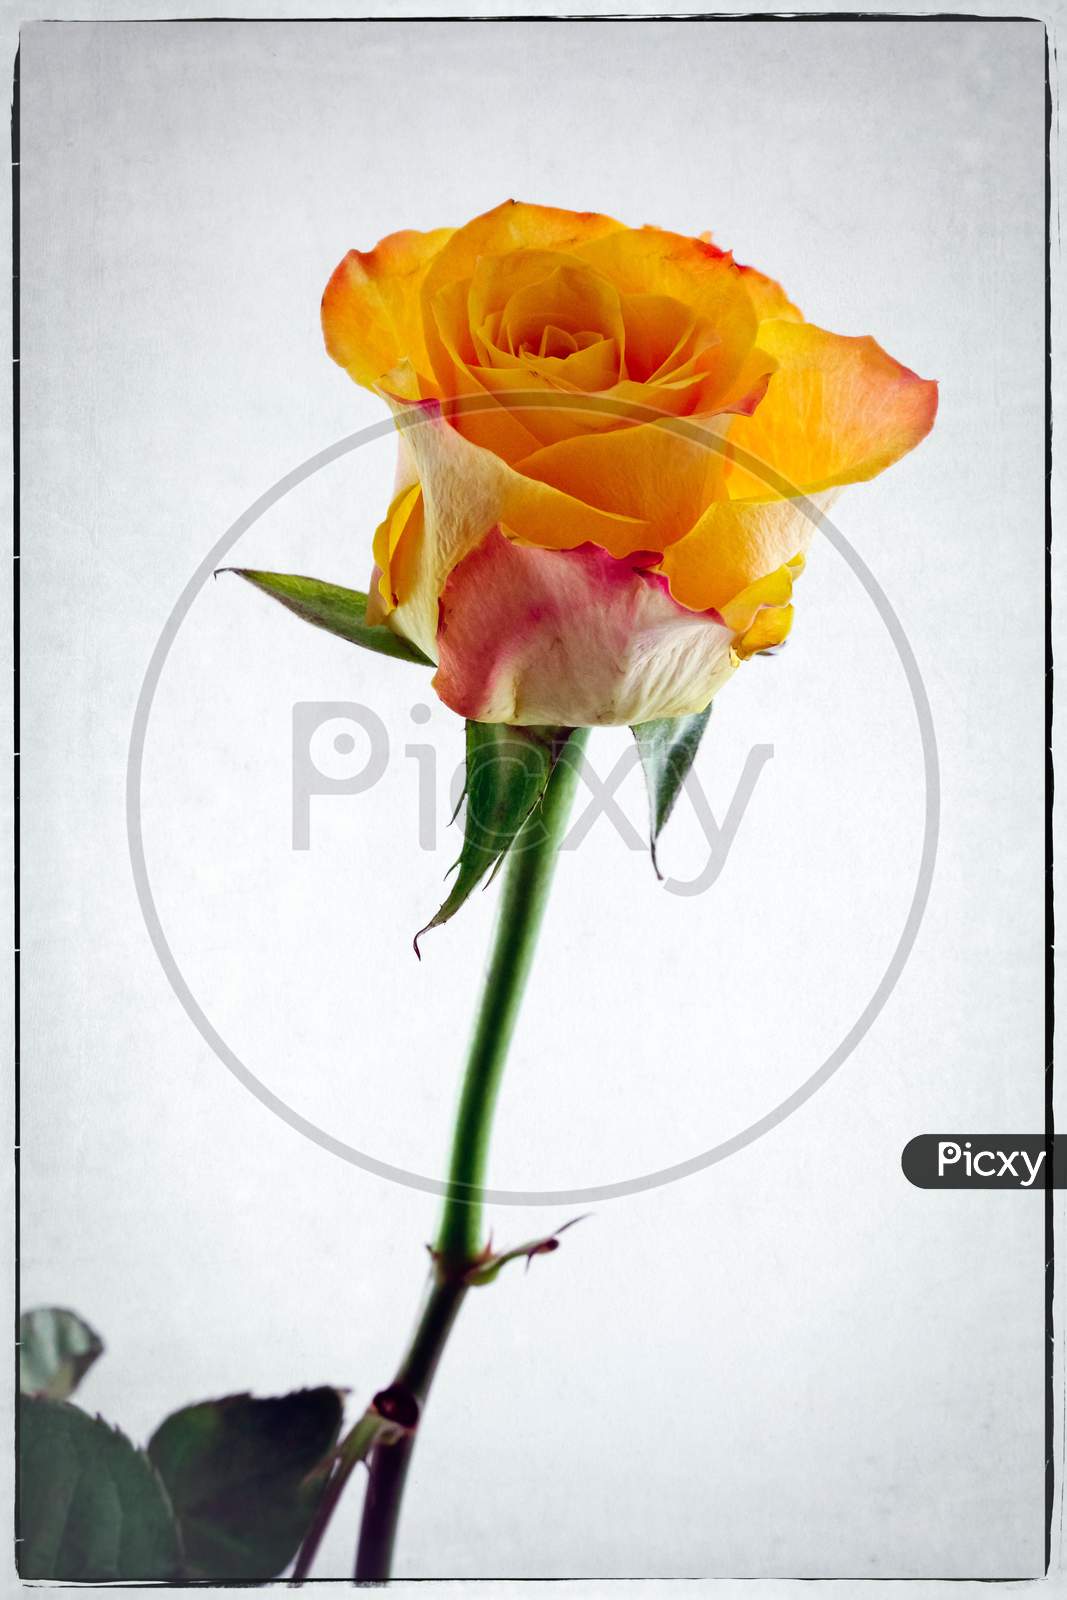 Close-Up Of A Single Orange Rose Stem And Flower